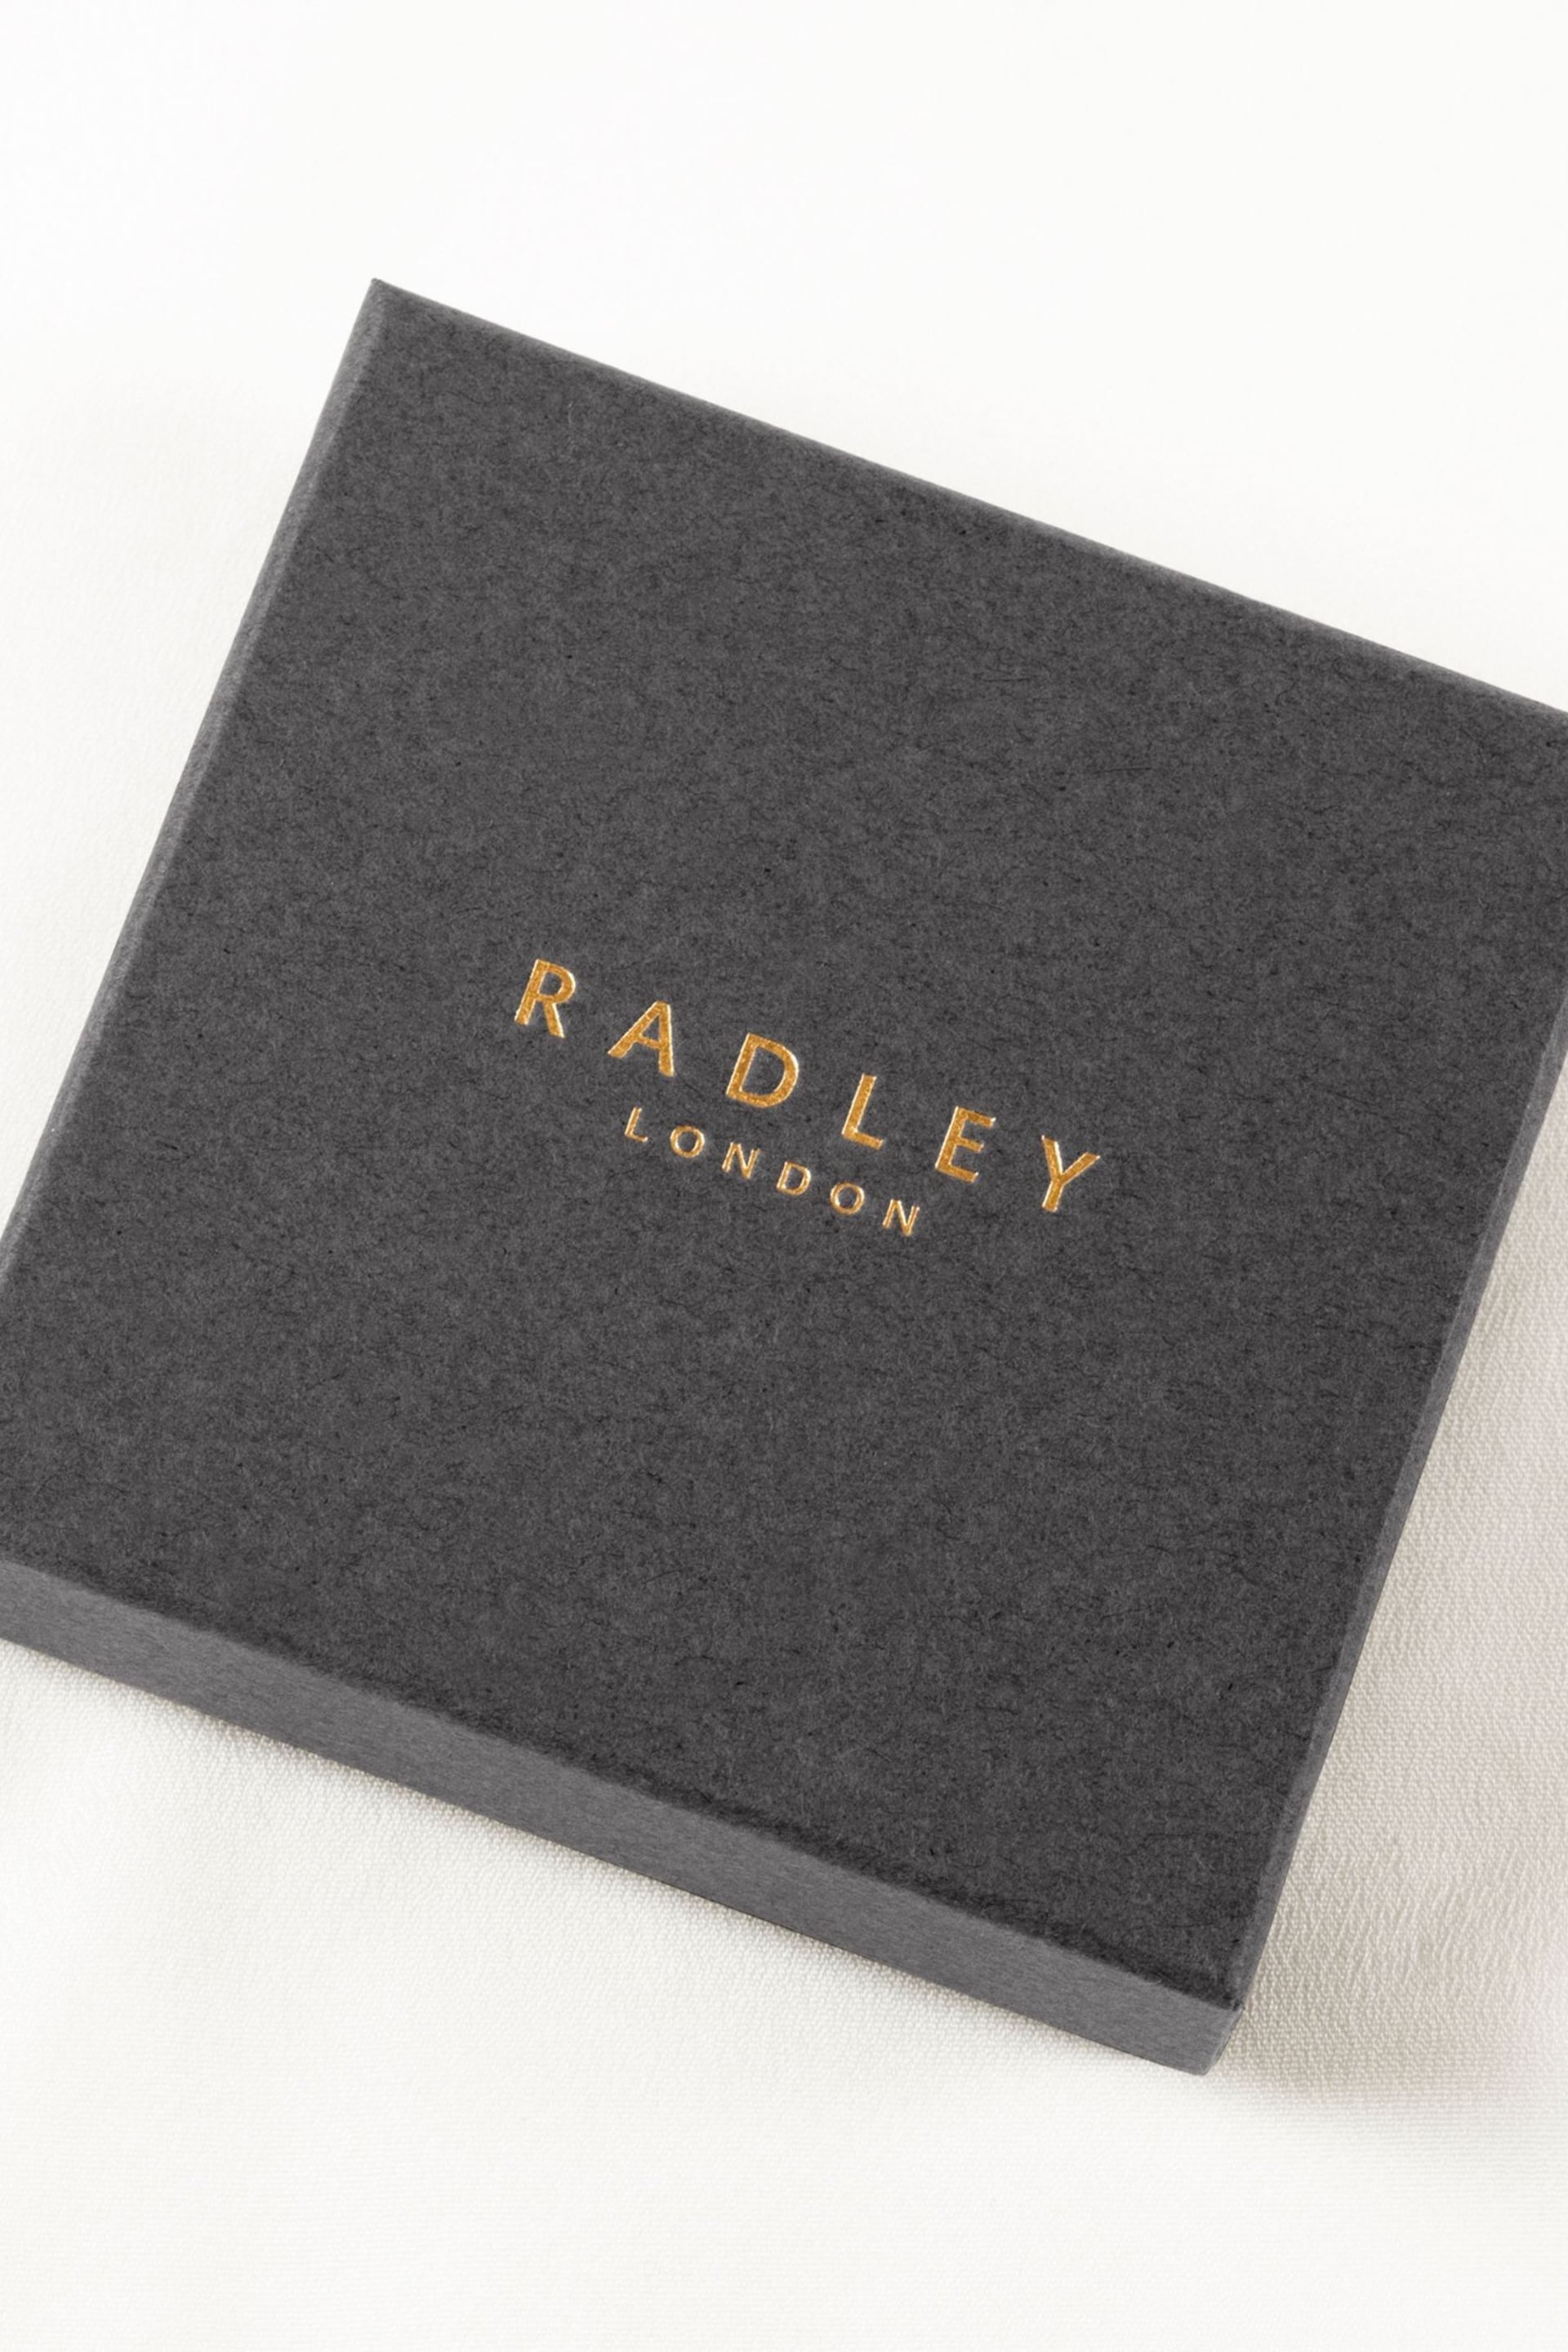 Radley Ladies Baylis Road 18ct Rose Gold Tone Sterling Silver Clear Stone Heart Bracelet - Image 4 of 4